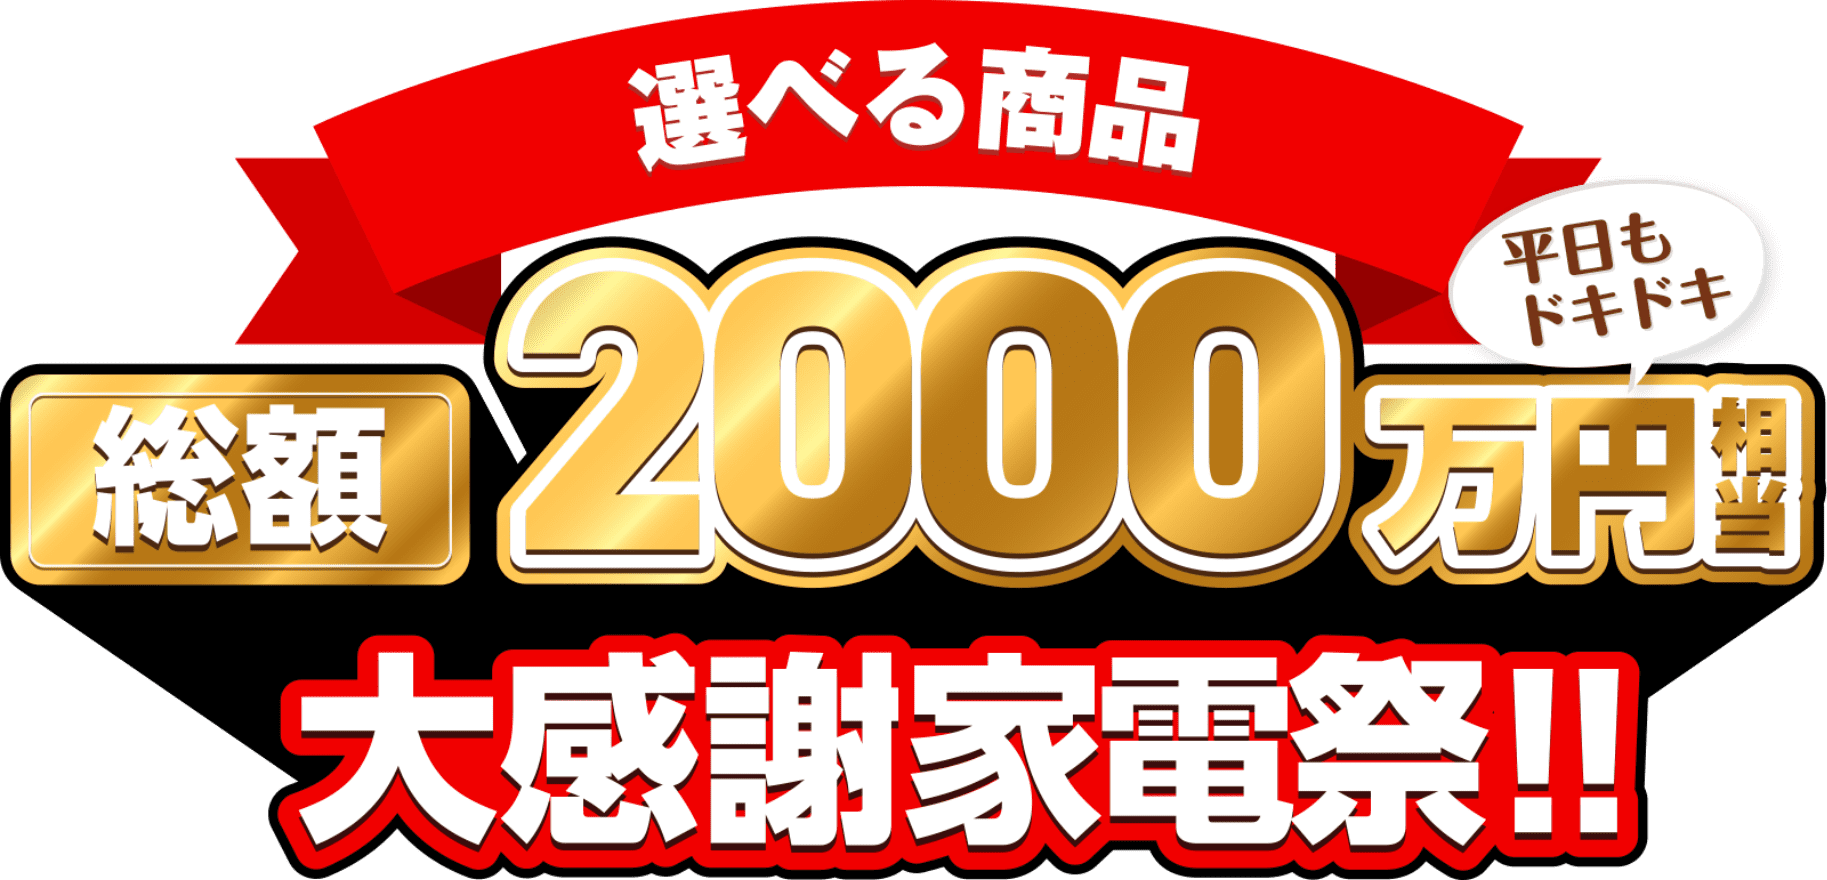 選べる商品 総額2000万円相当 大感謝家電祭！